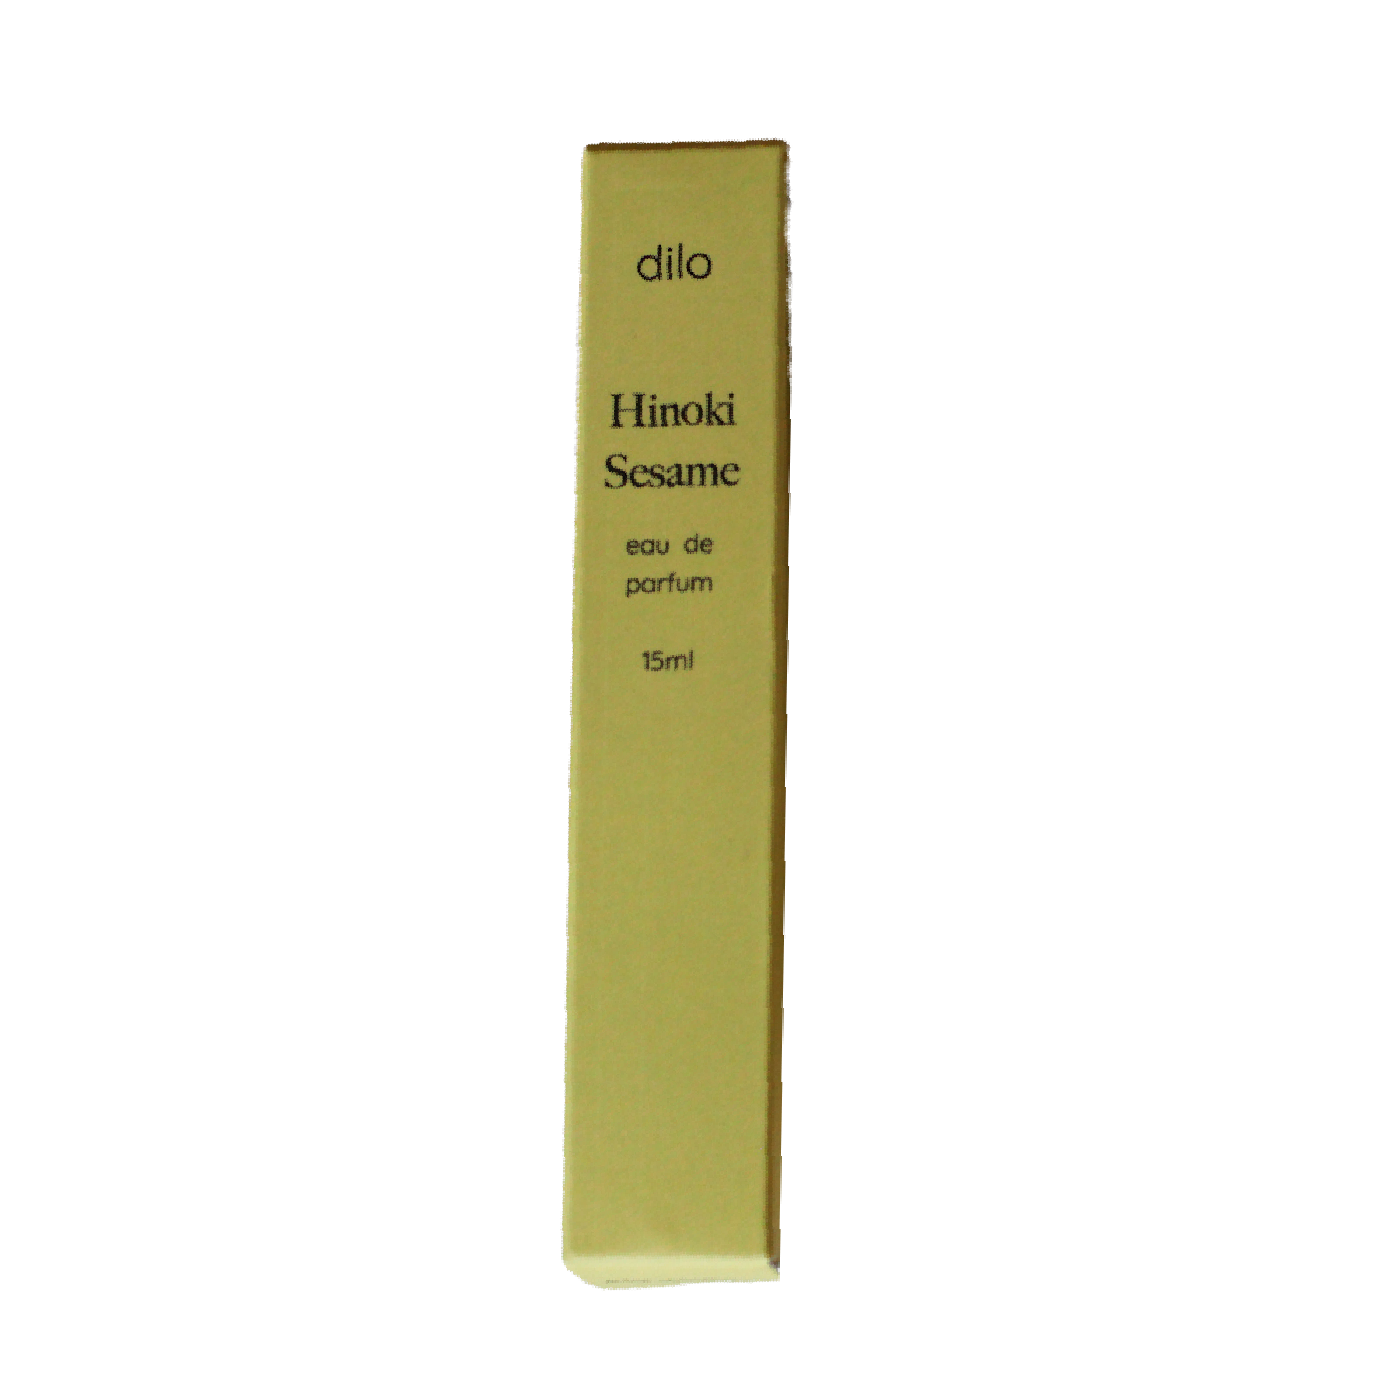 Hinoki Sesame - 15ml Unisex Eau de Parfum - Travel Sprayer